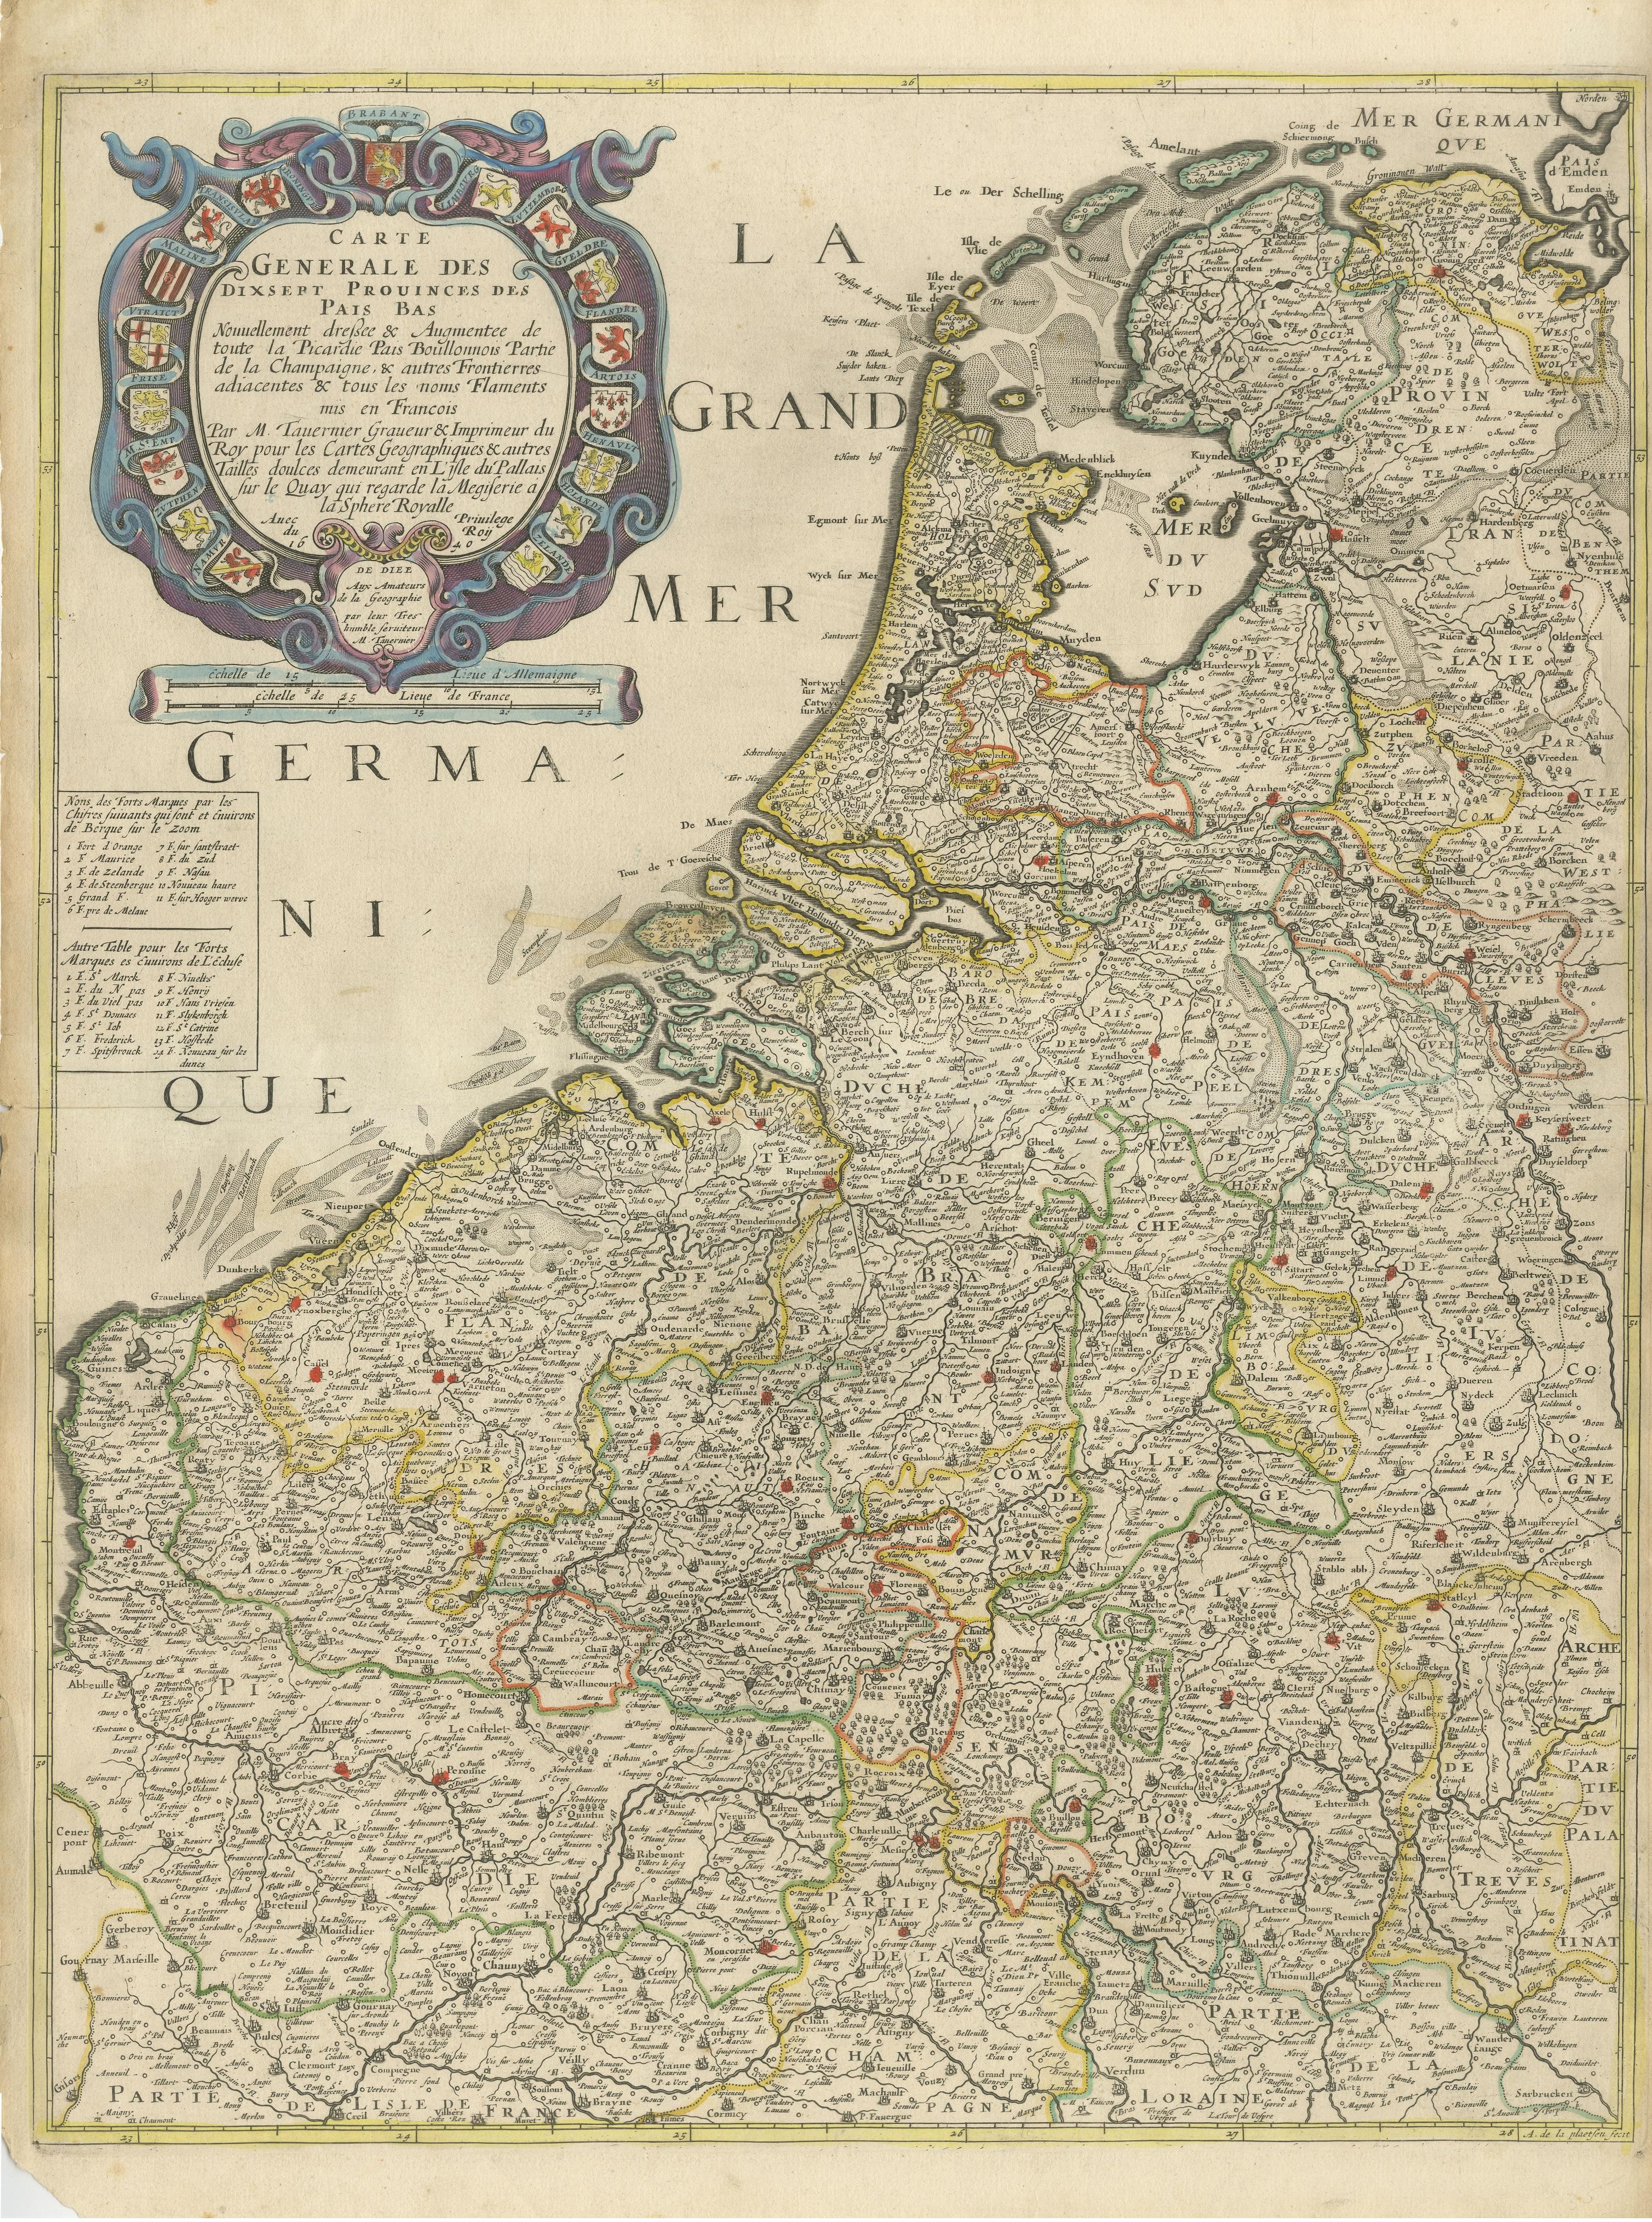 netherlands provinces map